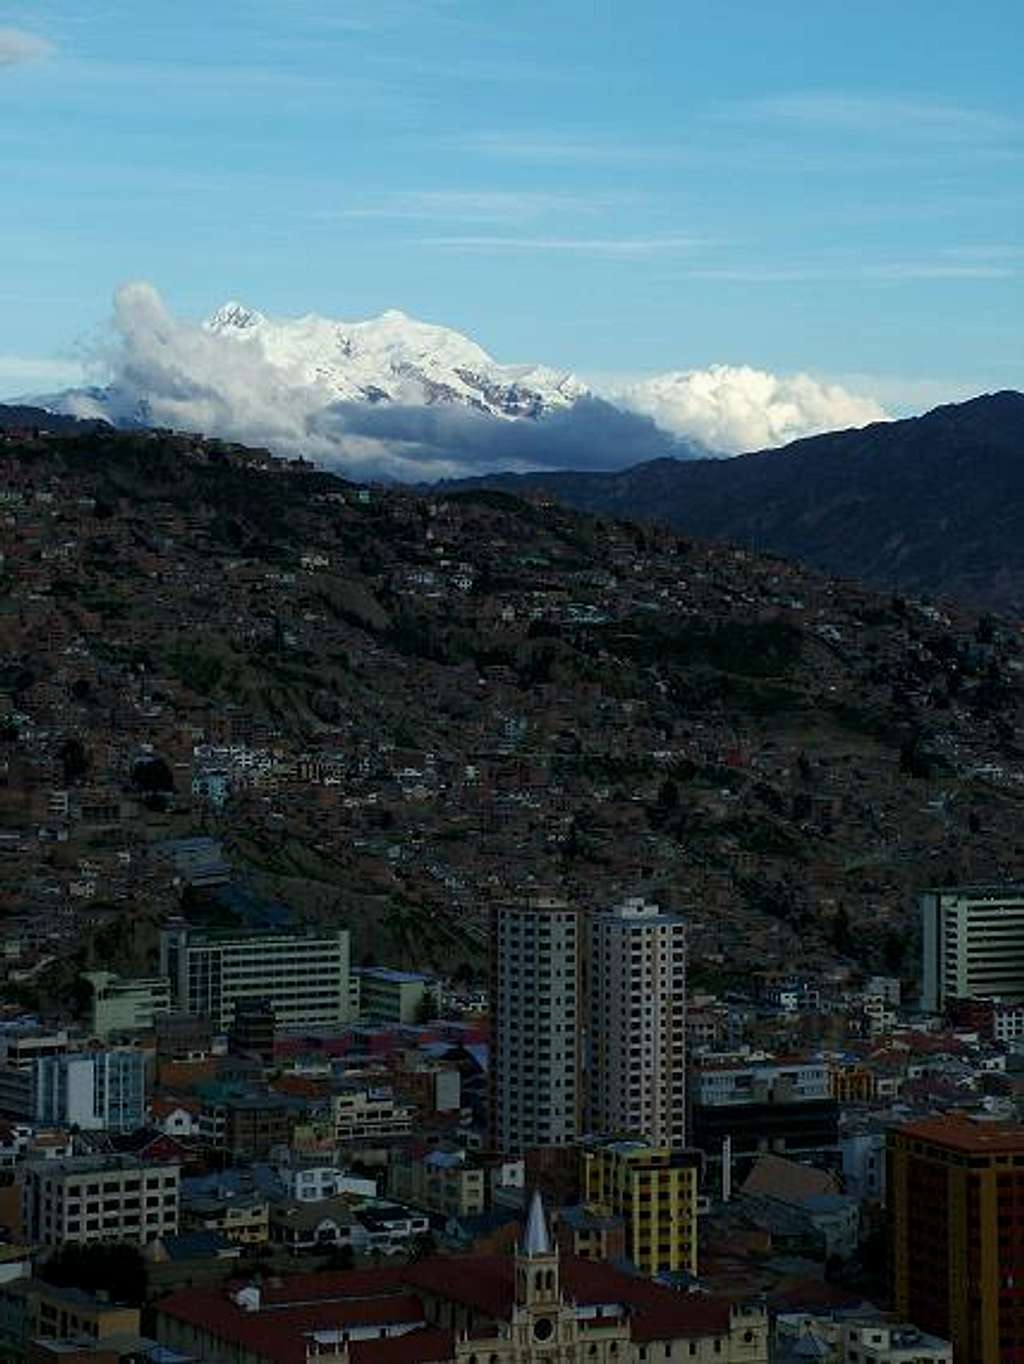 Illimani from the La Paz Mirador